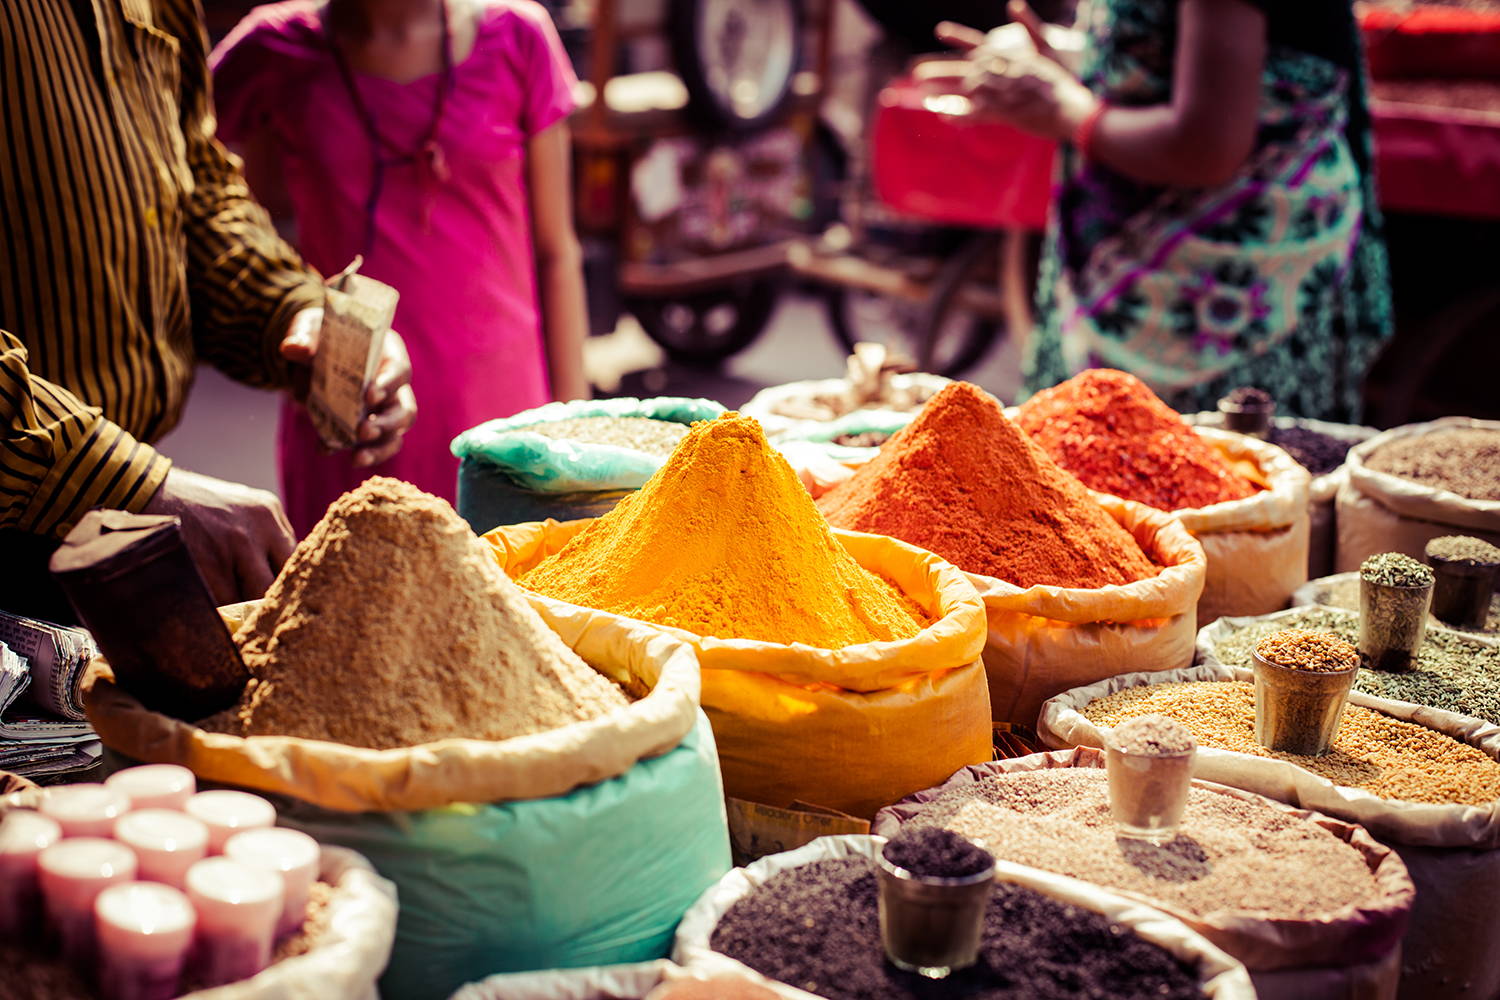 Spice Market in India © Curioso.Photography - stock.adobe.com